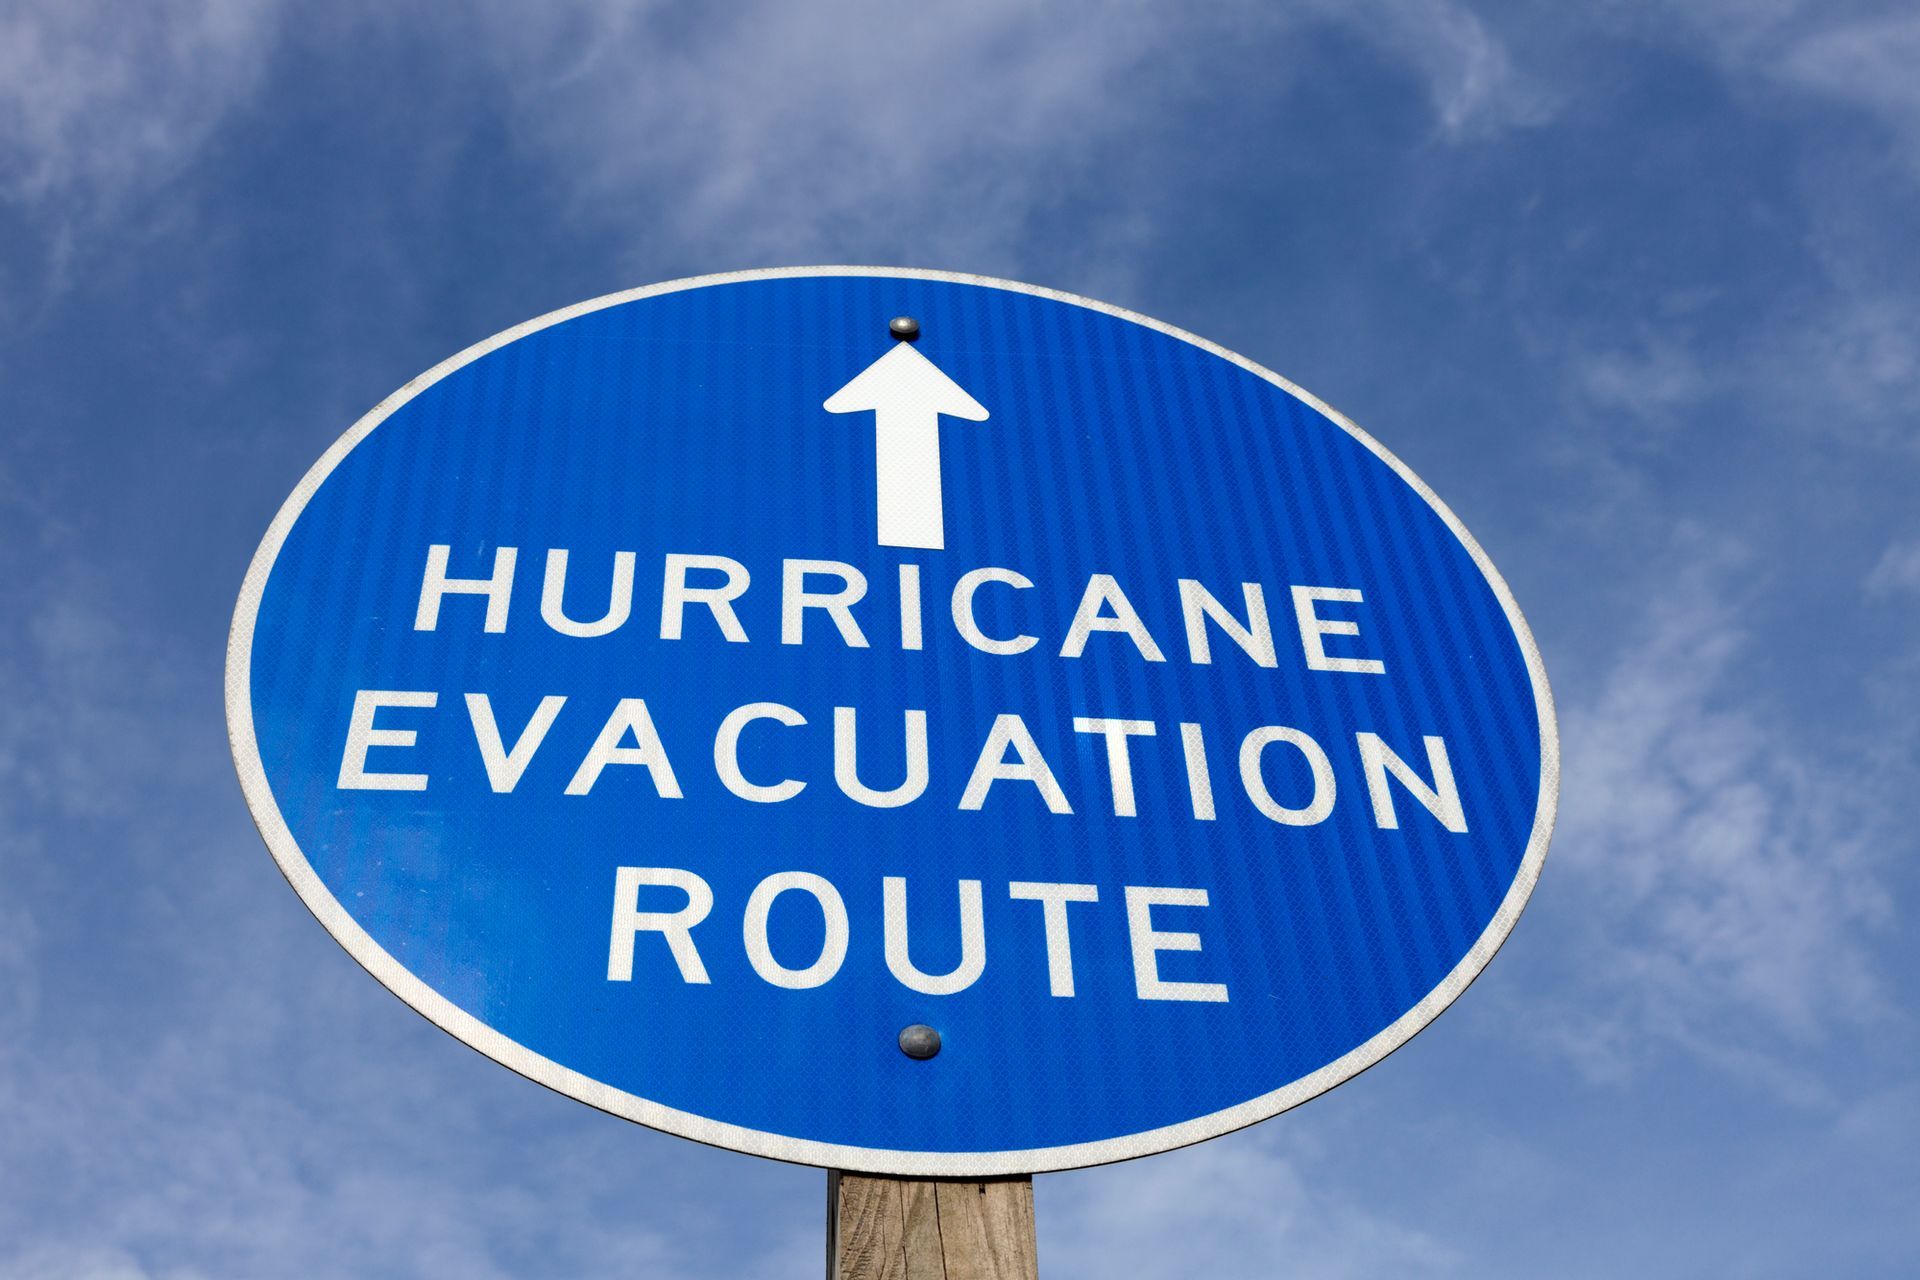 Finding a Hurricane Damage Attorney in Bonita Springs, FL